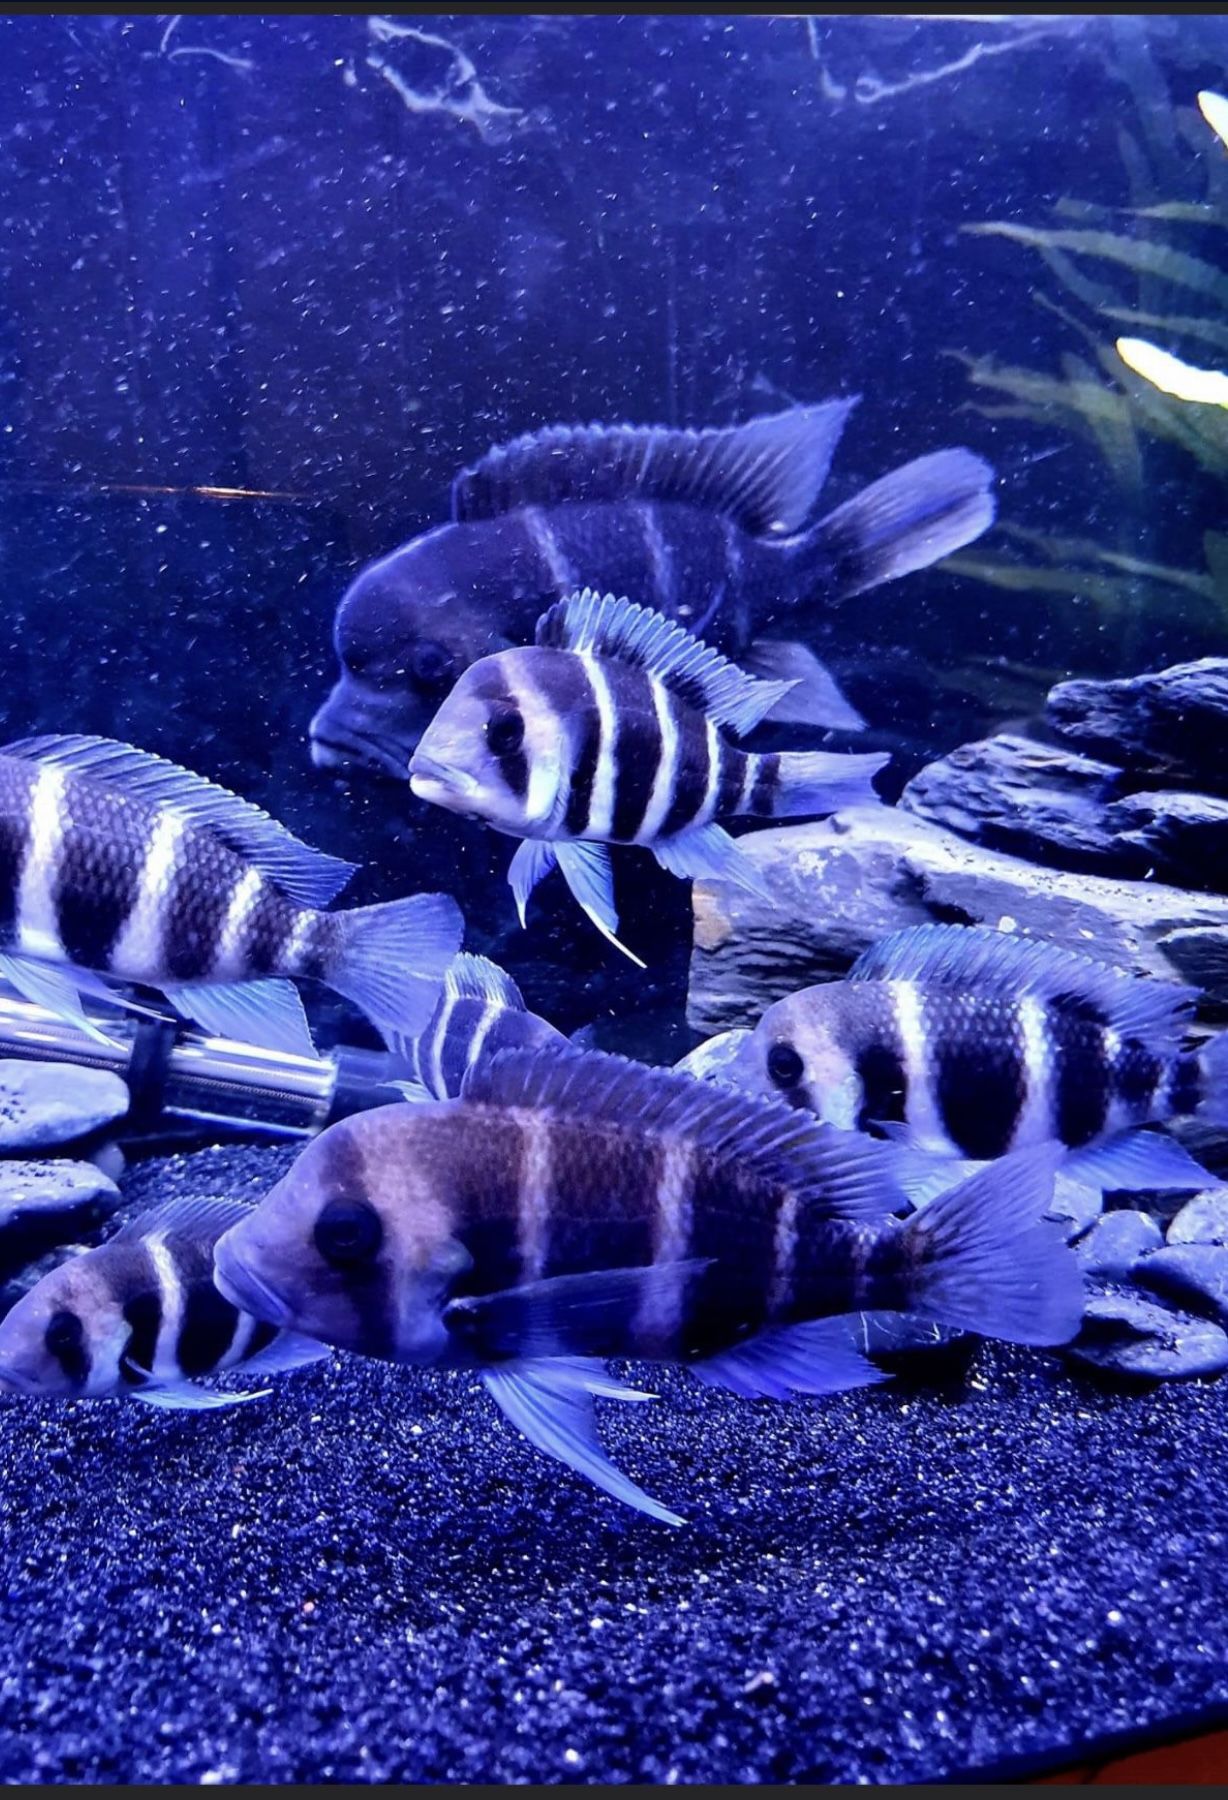 Fish Tank Decorations 